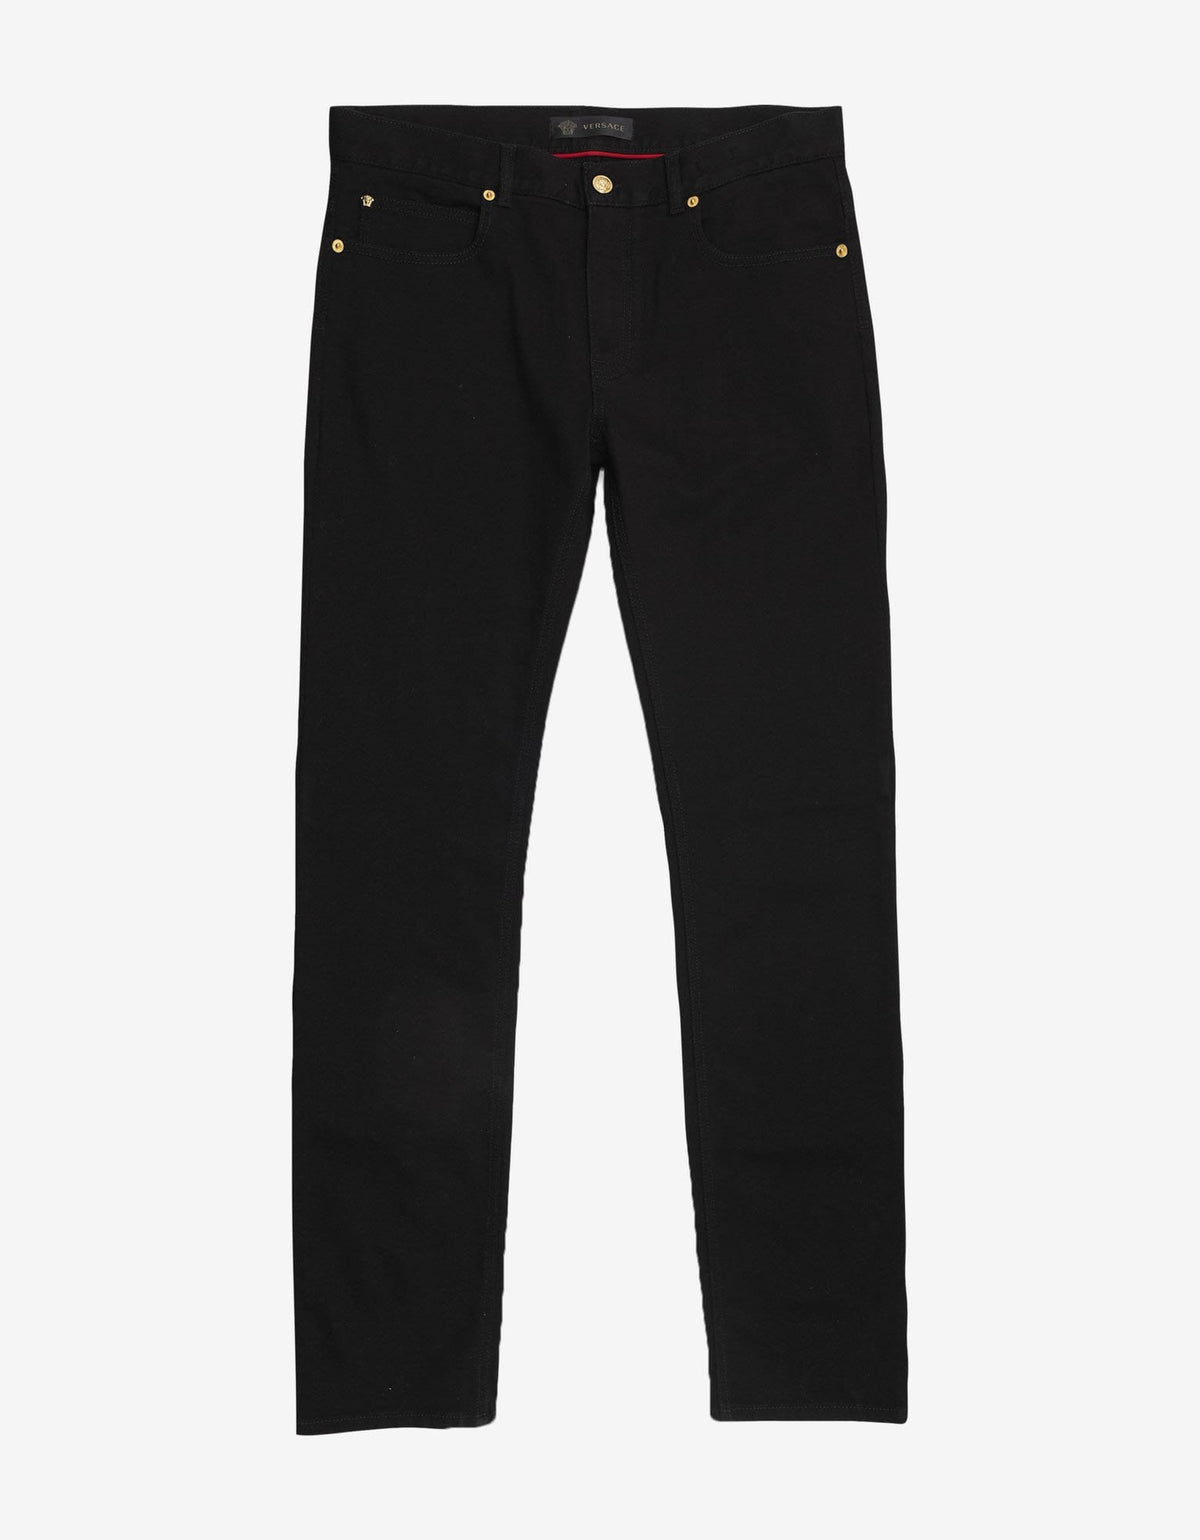 Versace Black Crest Embroidery Slim Jeans